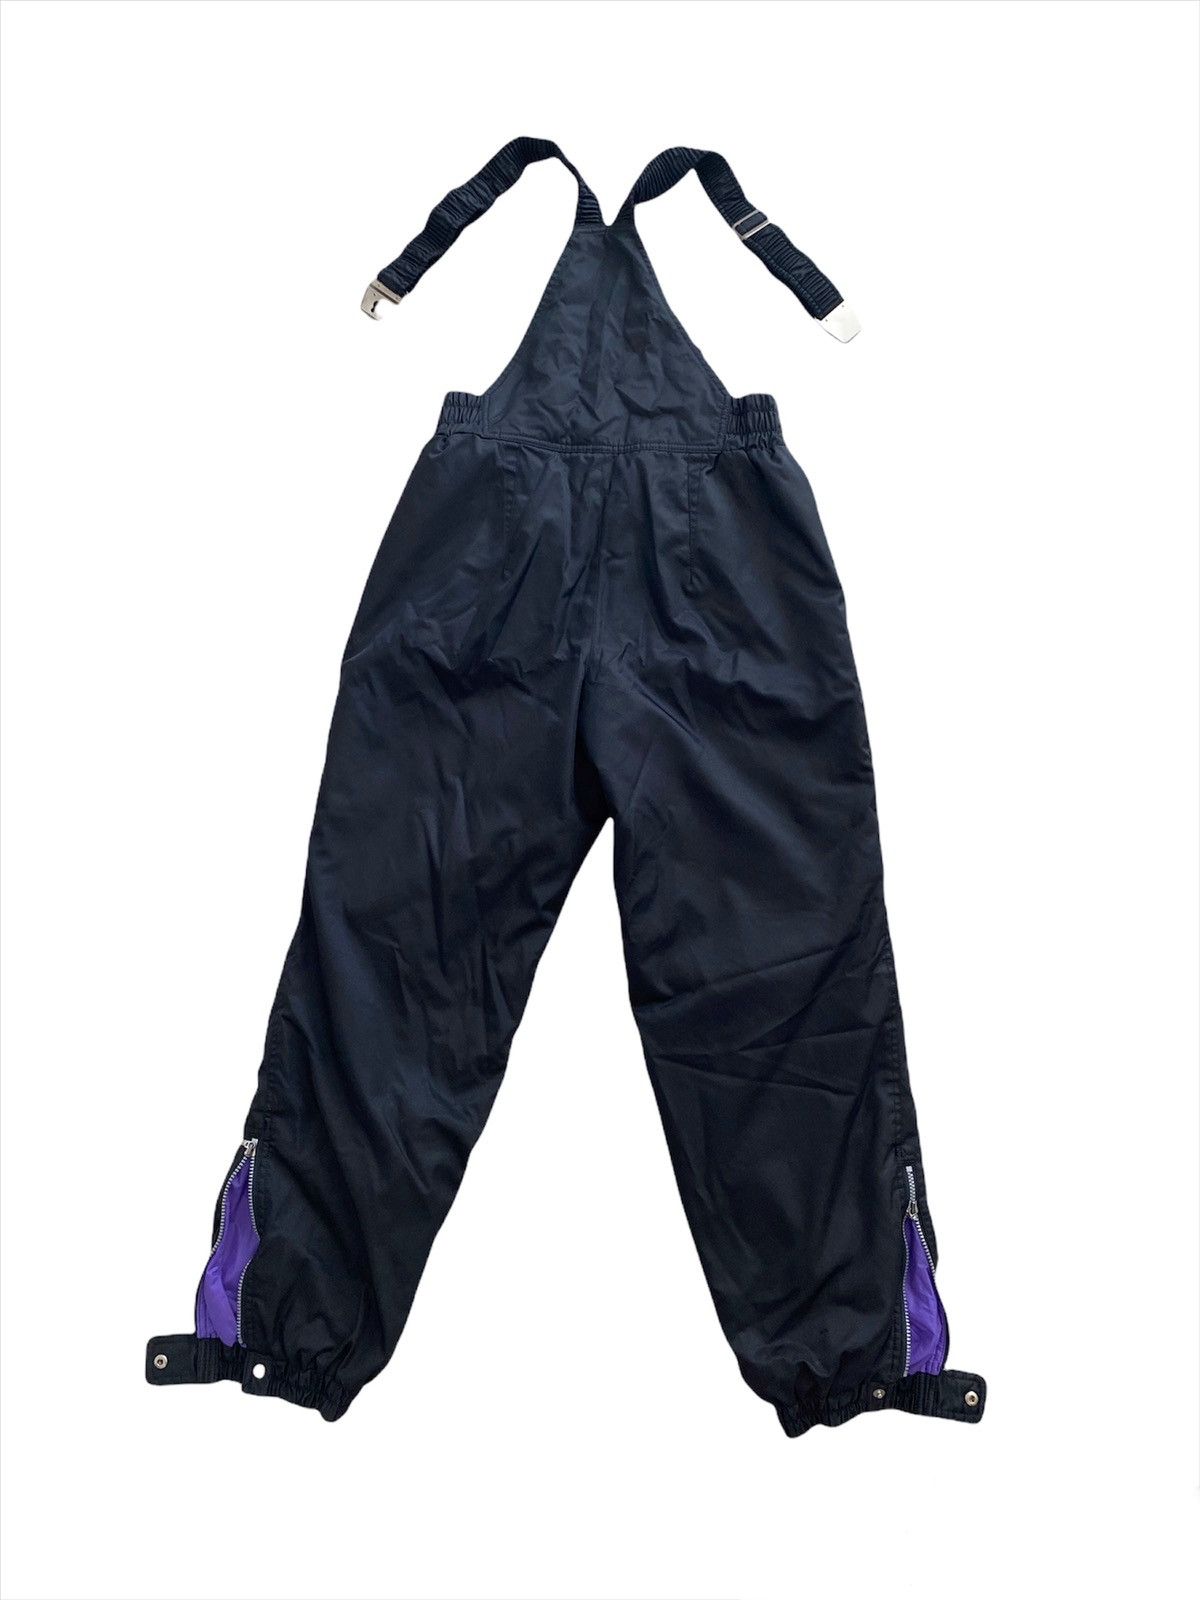 Adidas Adidas Snow Gear Overalls Ski Pants Big Logo Size US 32 / EU 48 - 3 Thumbnail